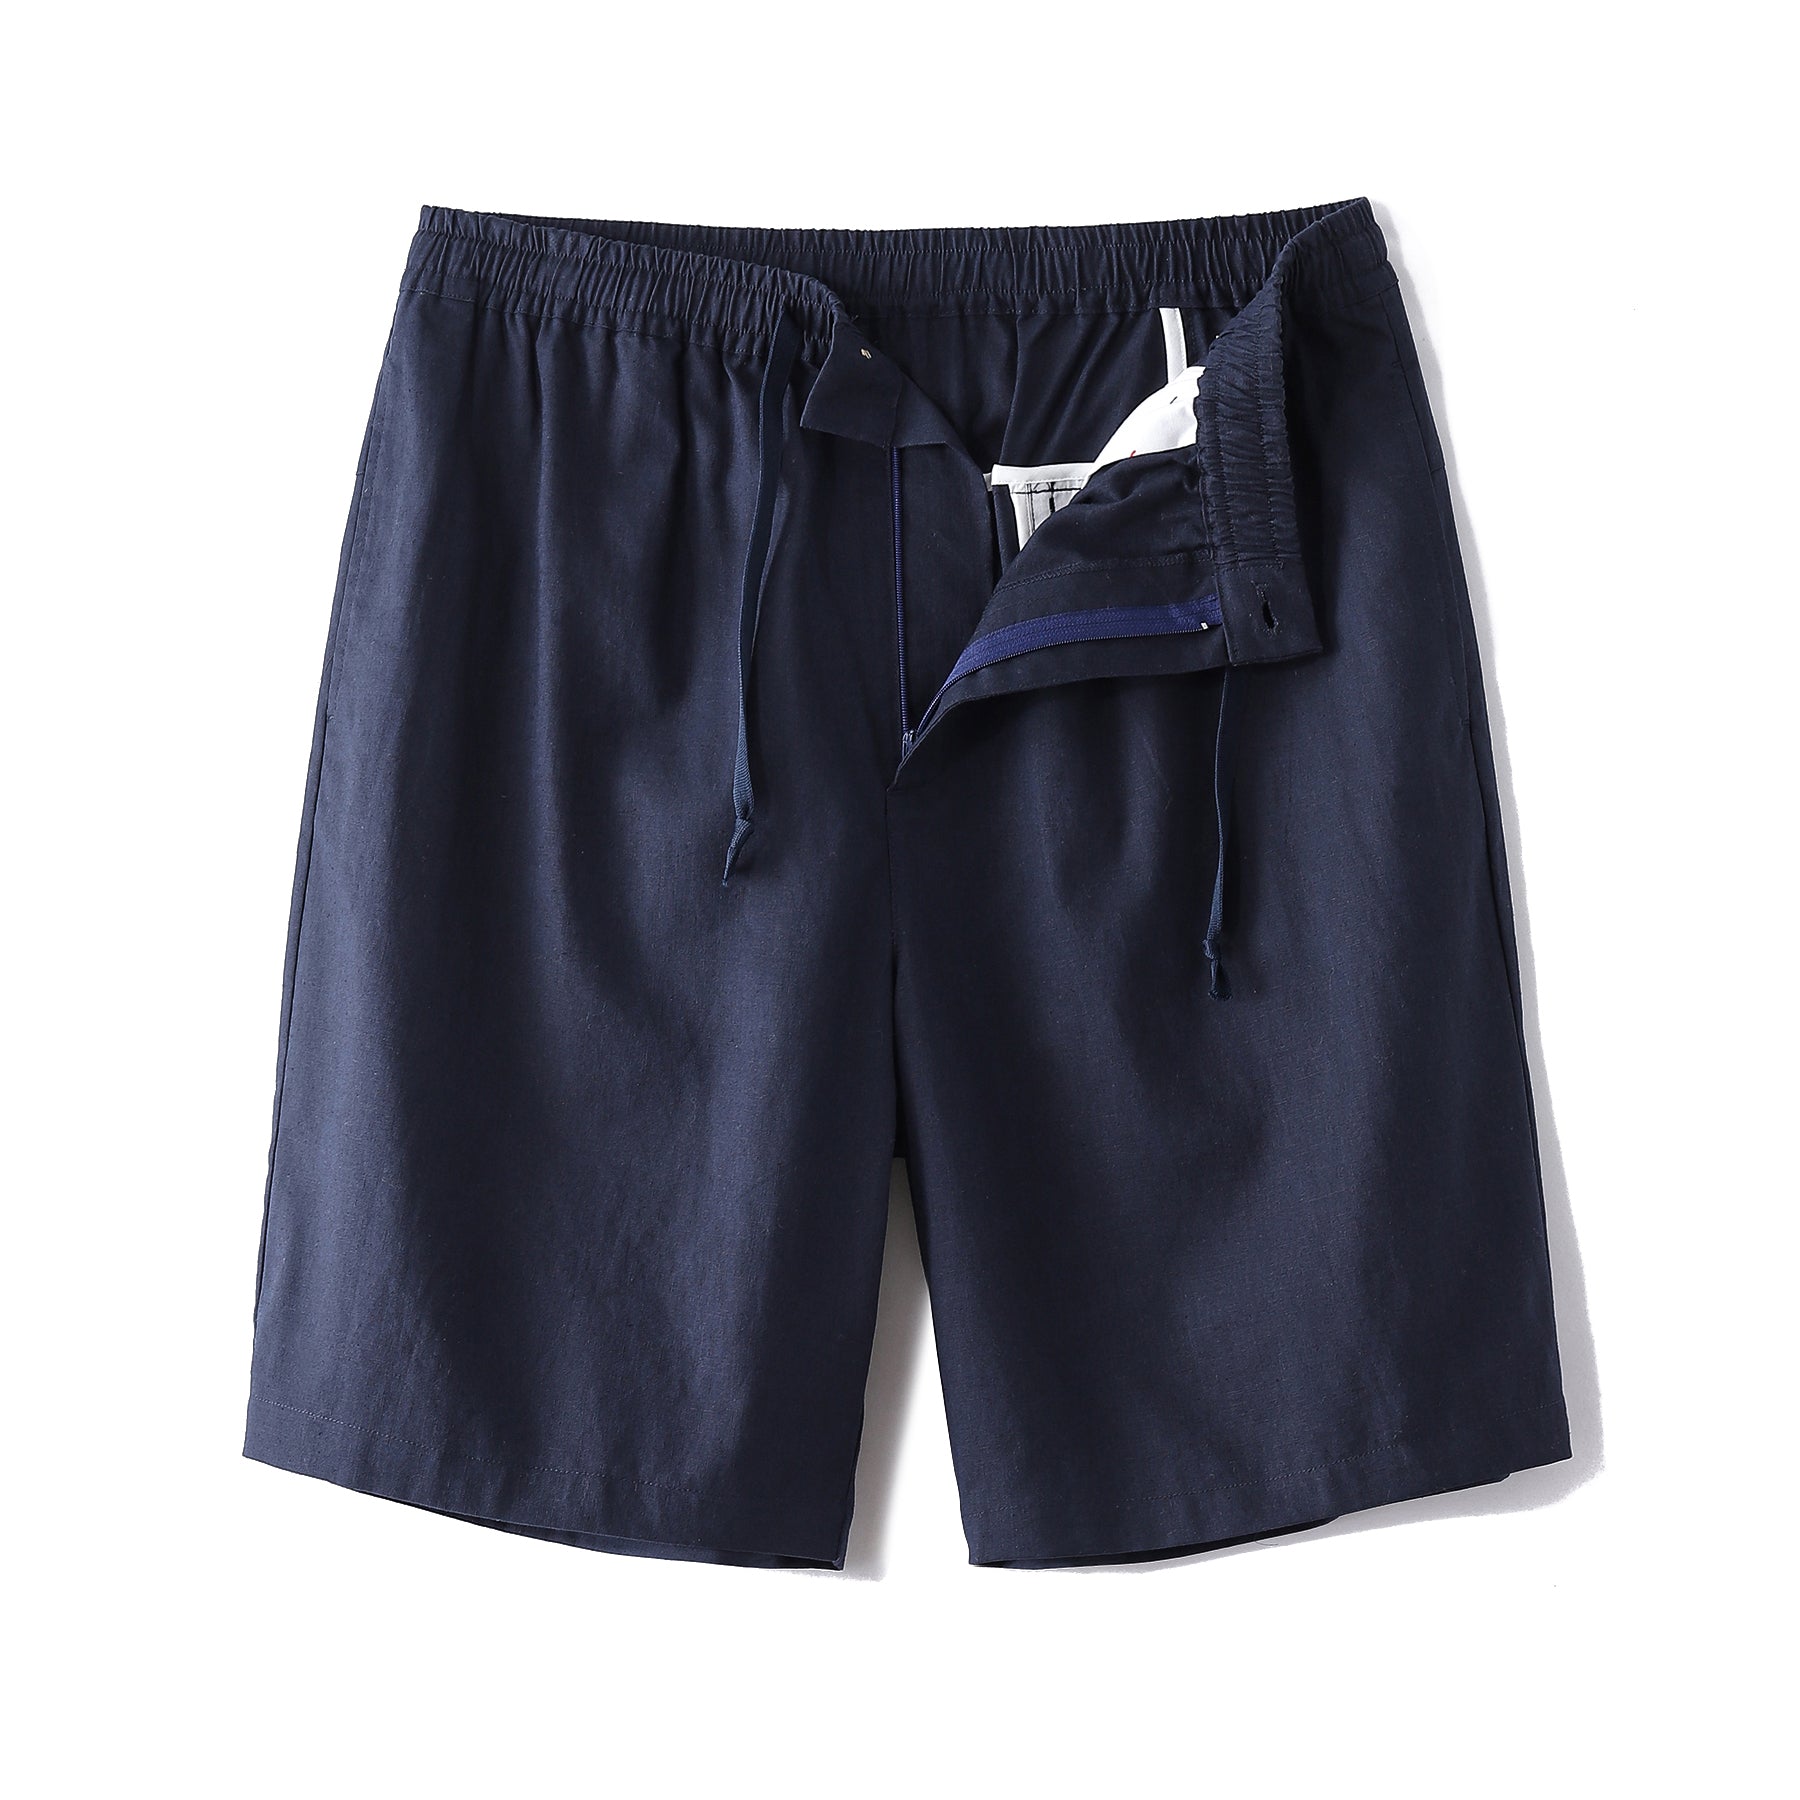 Mid-Rise Straight Bermuda 8-10 Inch Shorts - NAVY BLUE Version 1.0